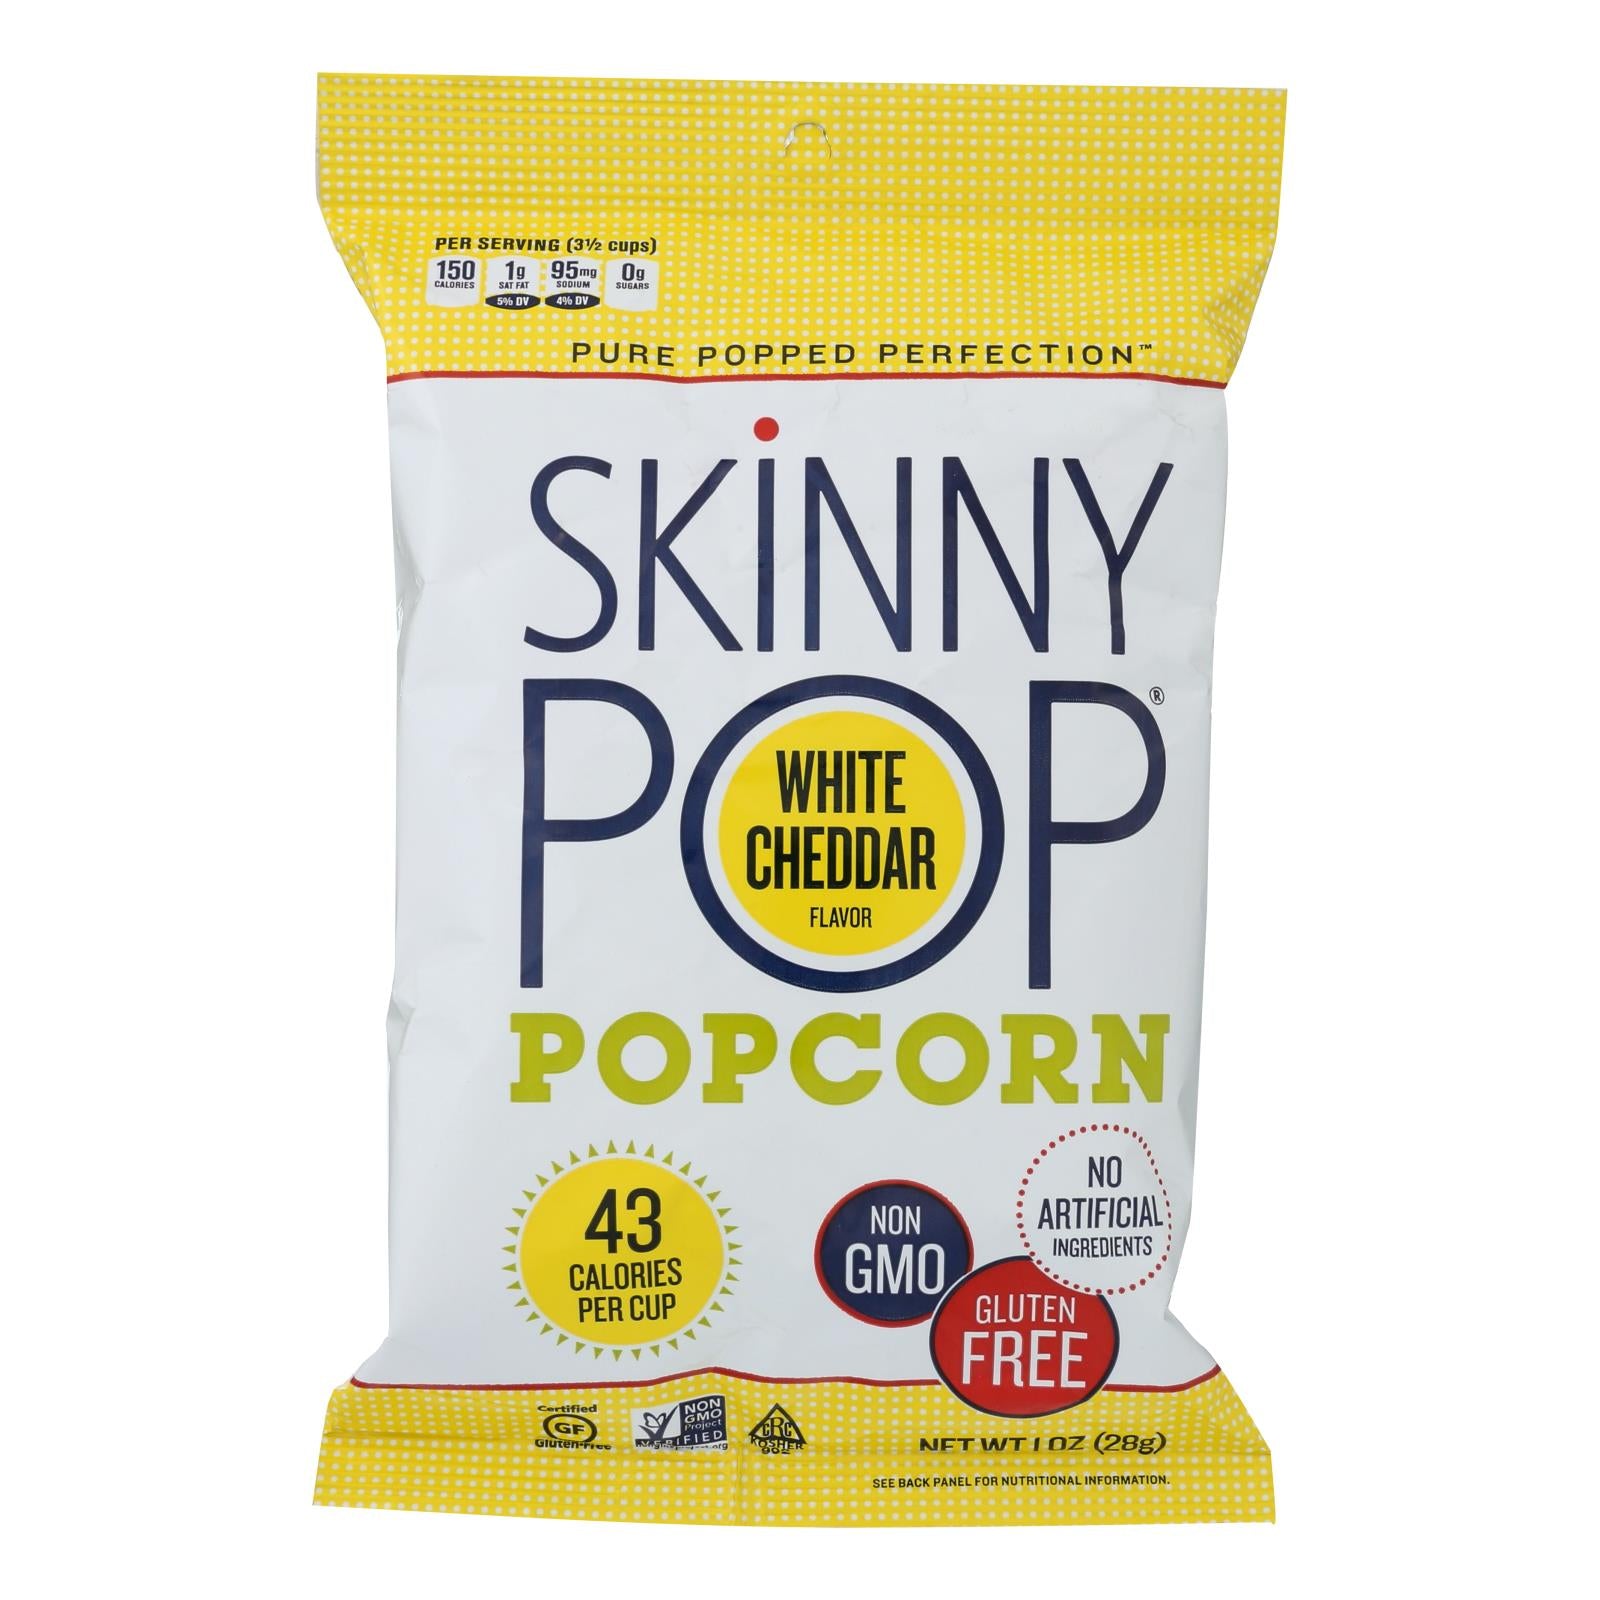 Skinnypop Popcorn Skinny Snack Flavored Popcorn White Cheddar - Case Of 12 - 1 Oz